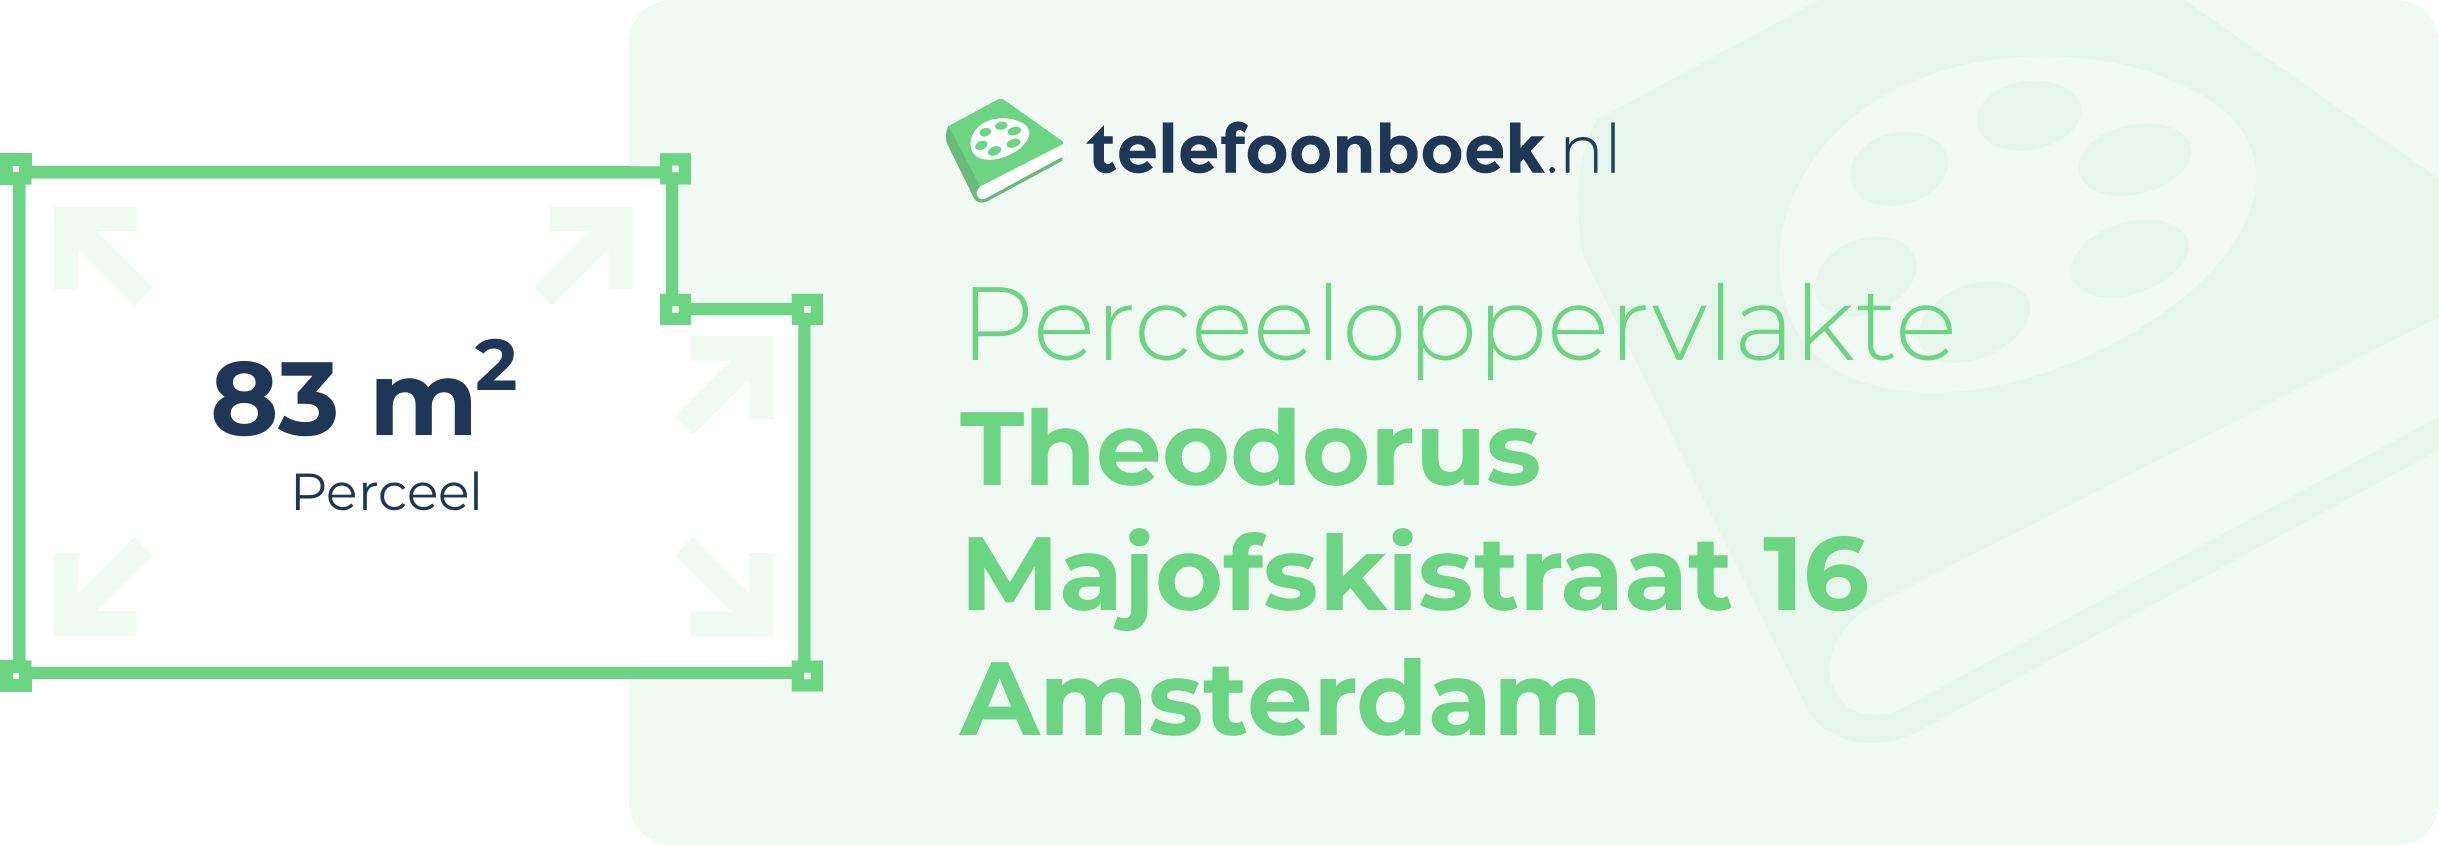 Perceeloppervlakte Theodorus Majofskistraat 16 Amsterdam